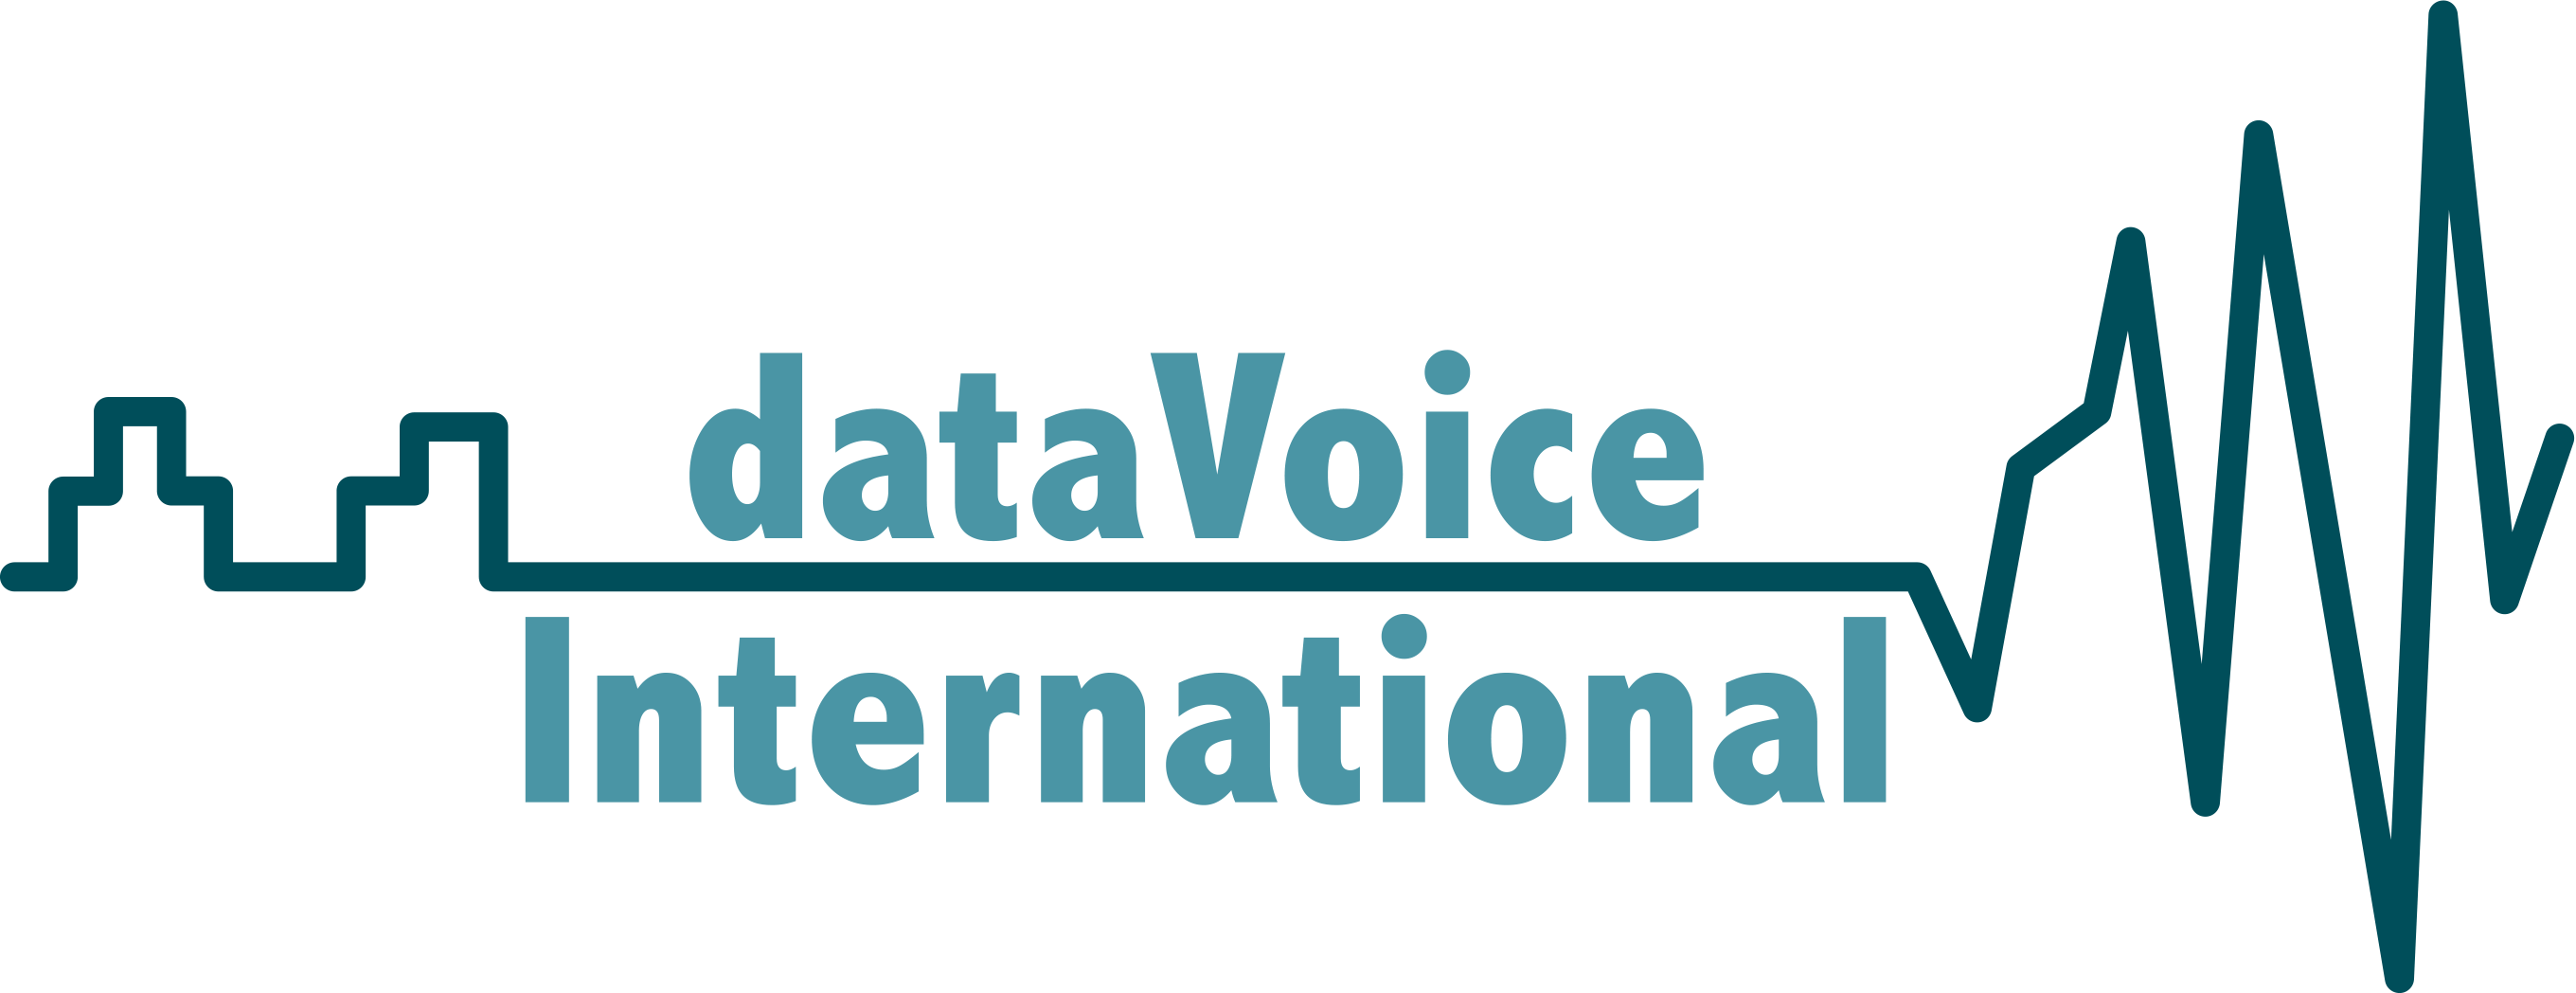 HU-Data-Voice-International-LOGO